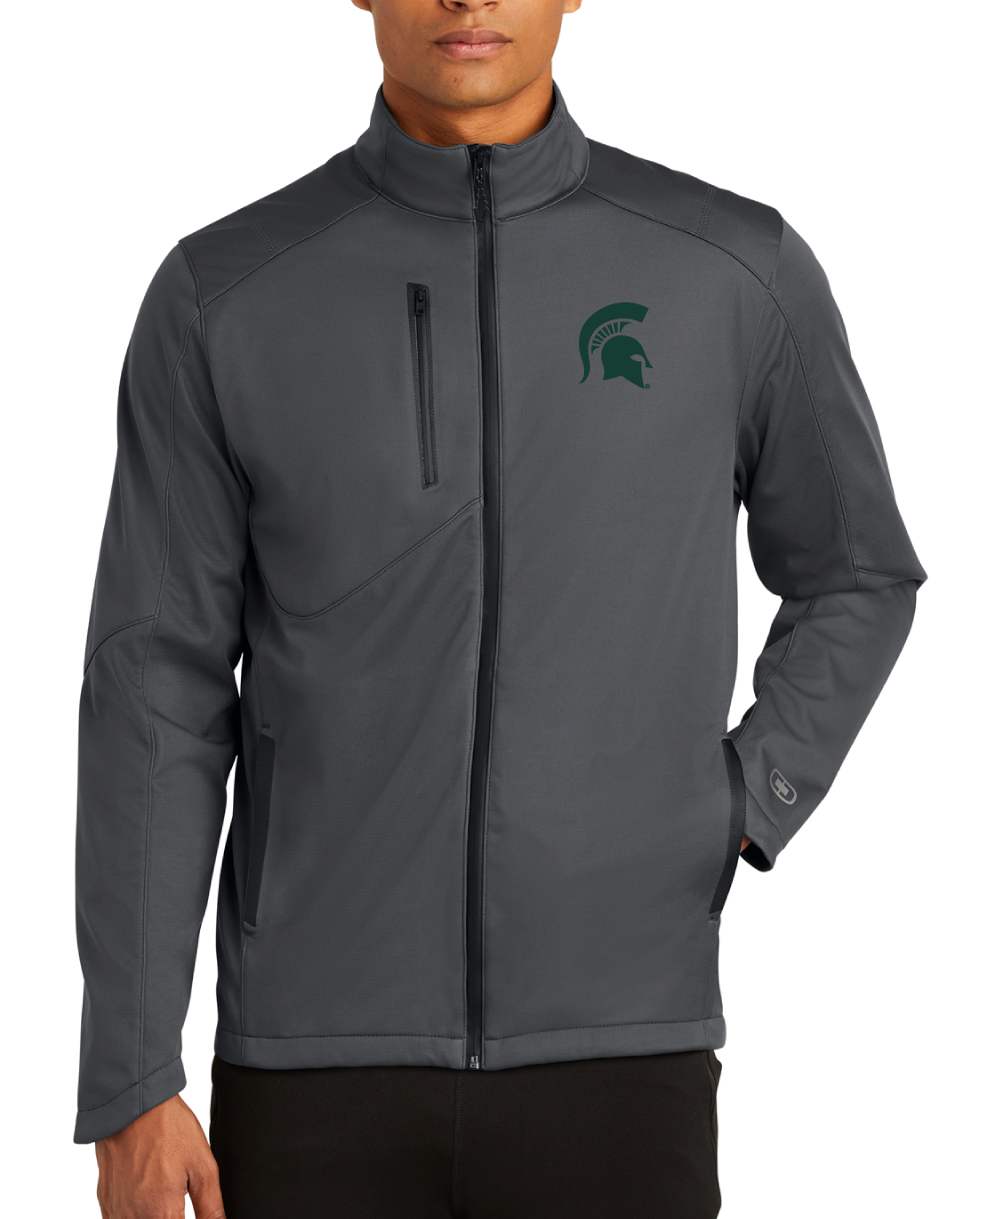 Michigan State Jacket in Grey with Green Spartan Helmet